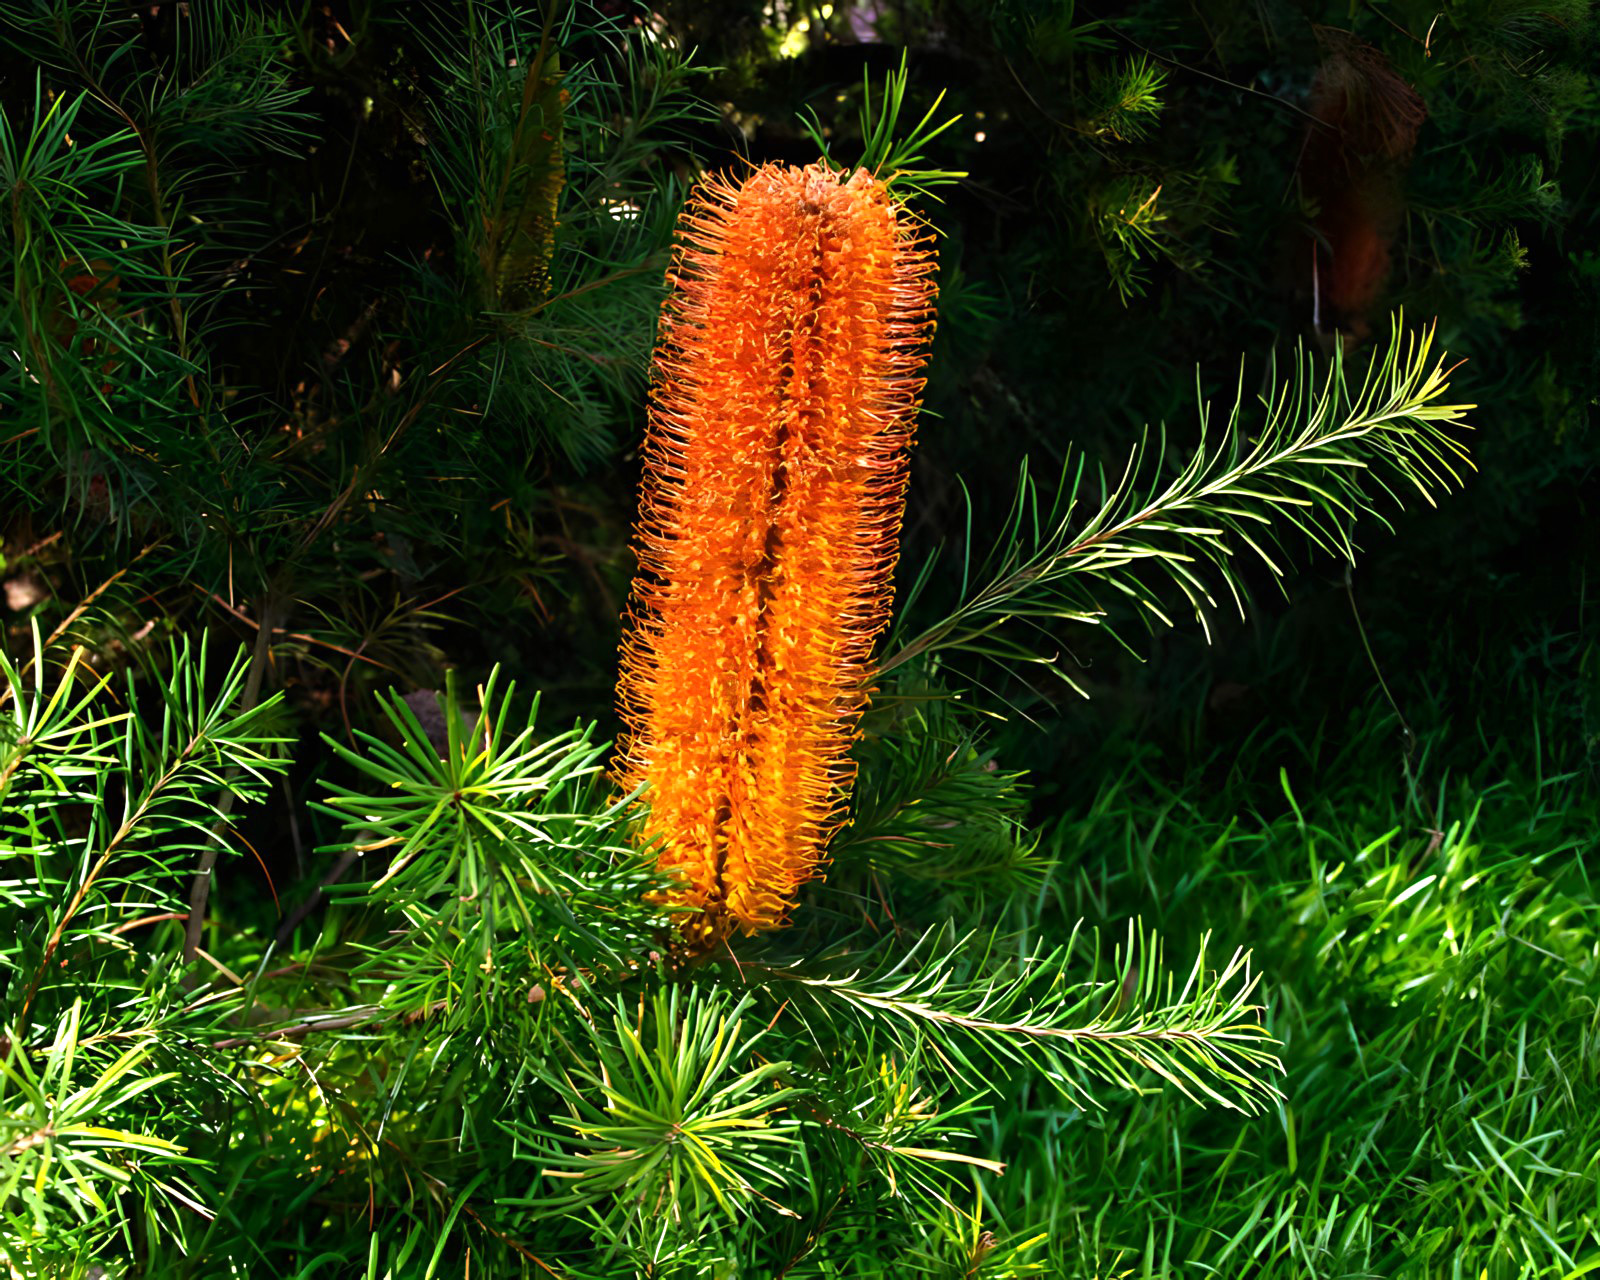 Heath Banksia - very popular in gardens, attracting nectar feeding birds